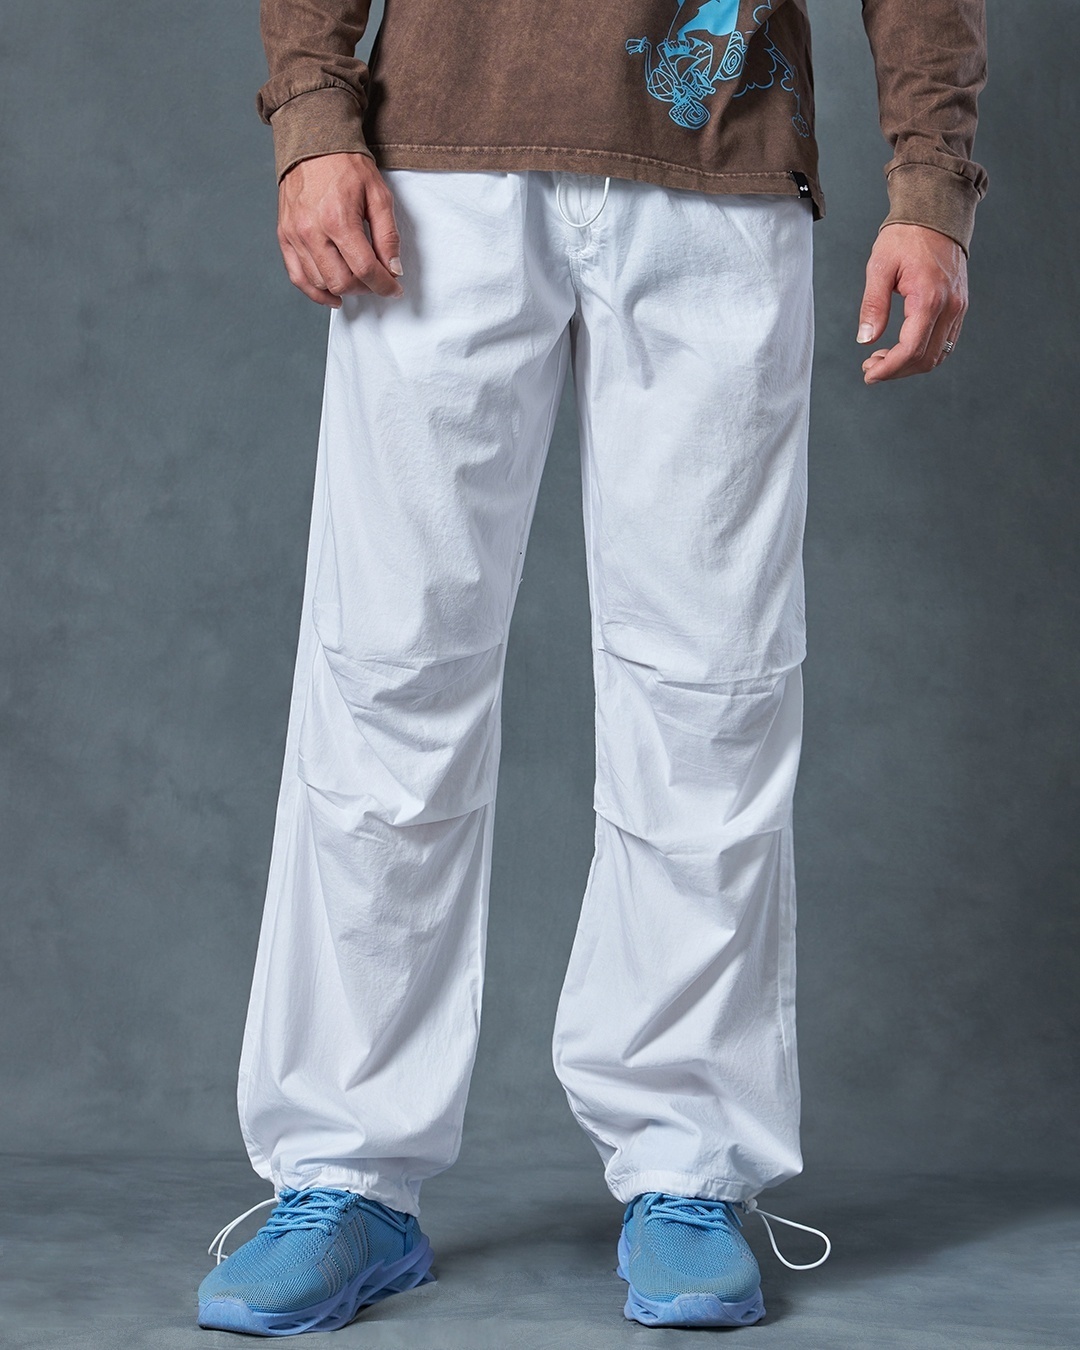 Men's White Oversized Parachute Pants to ace skater boy style